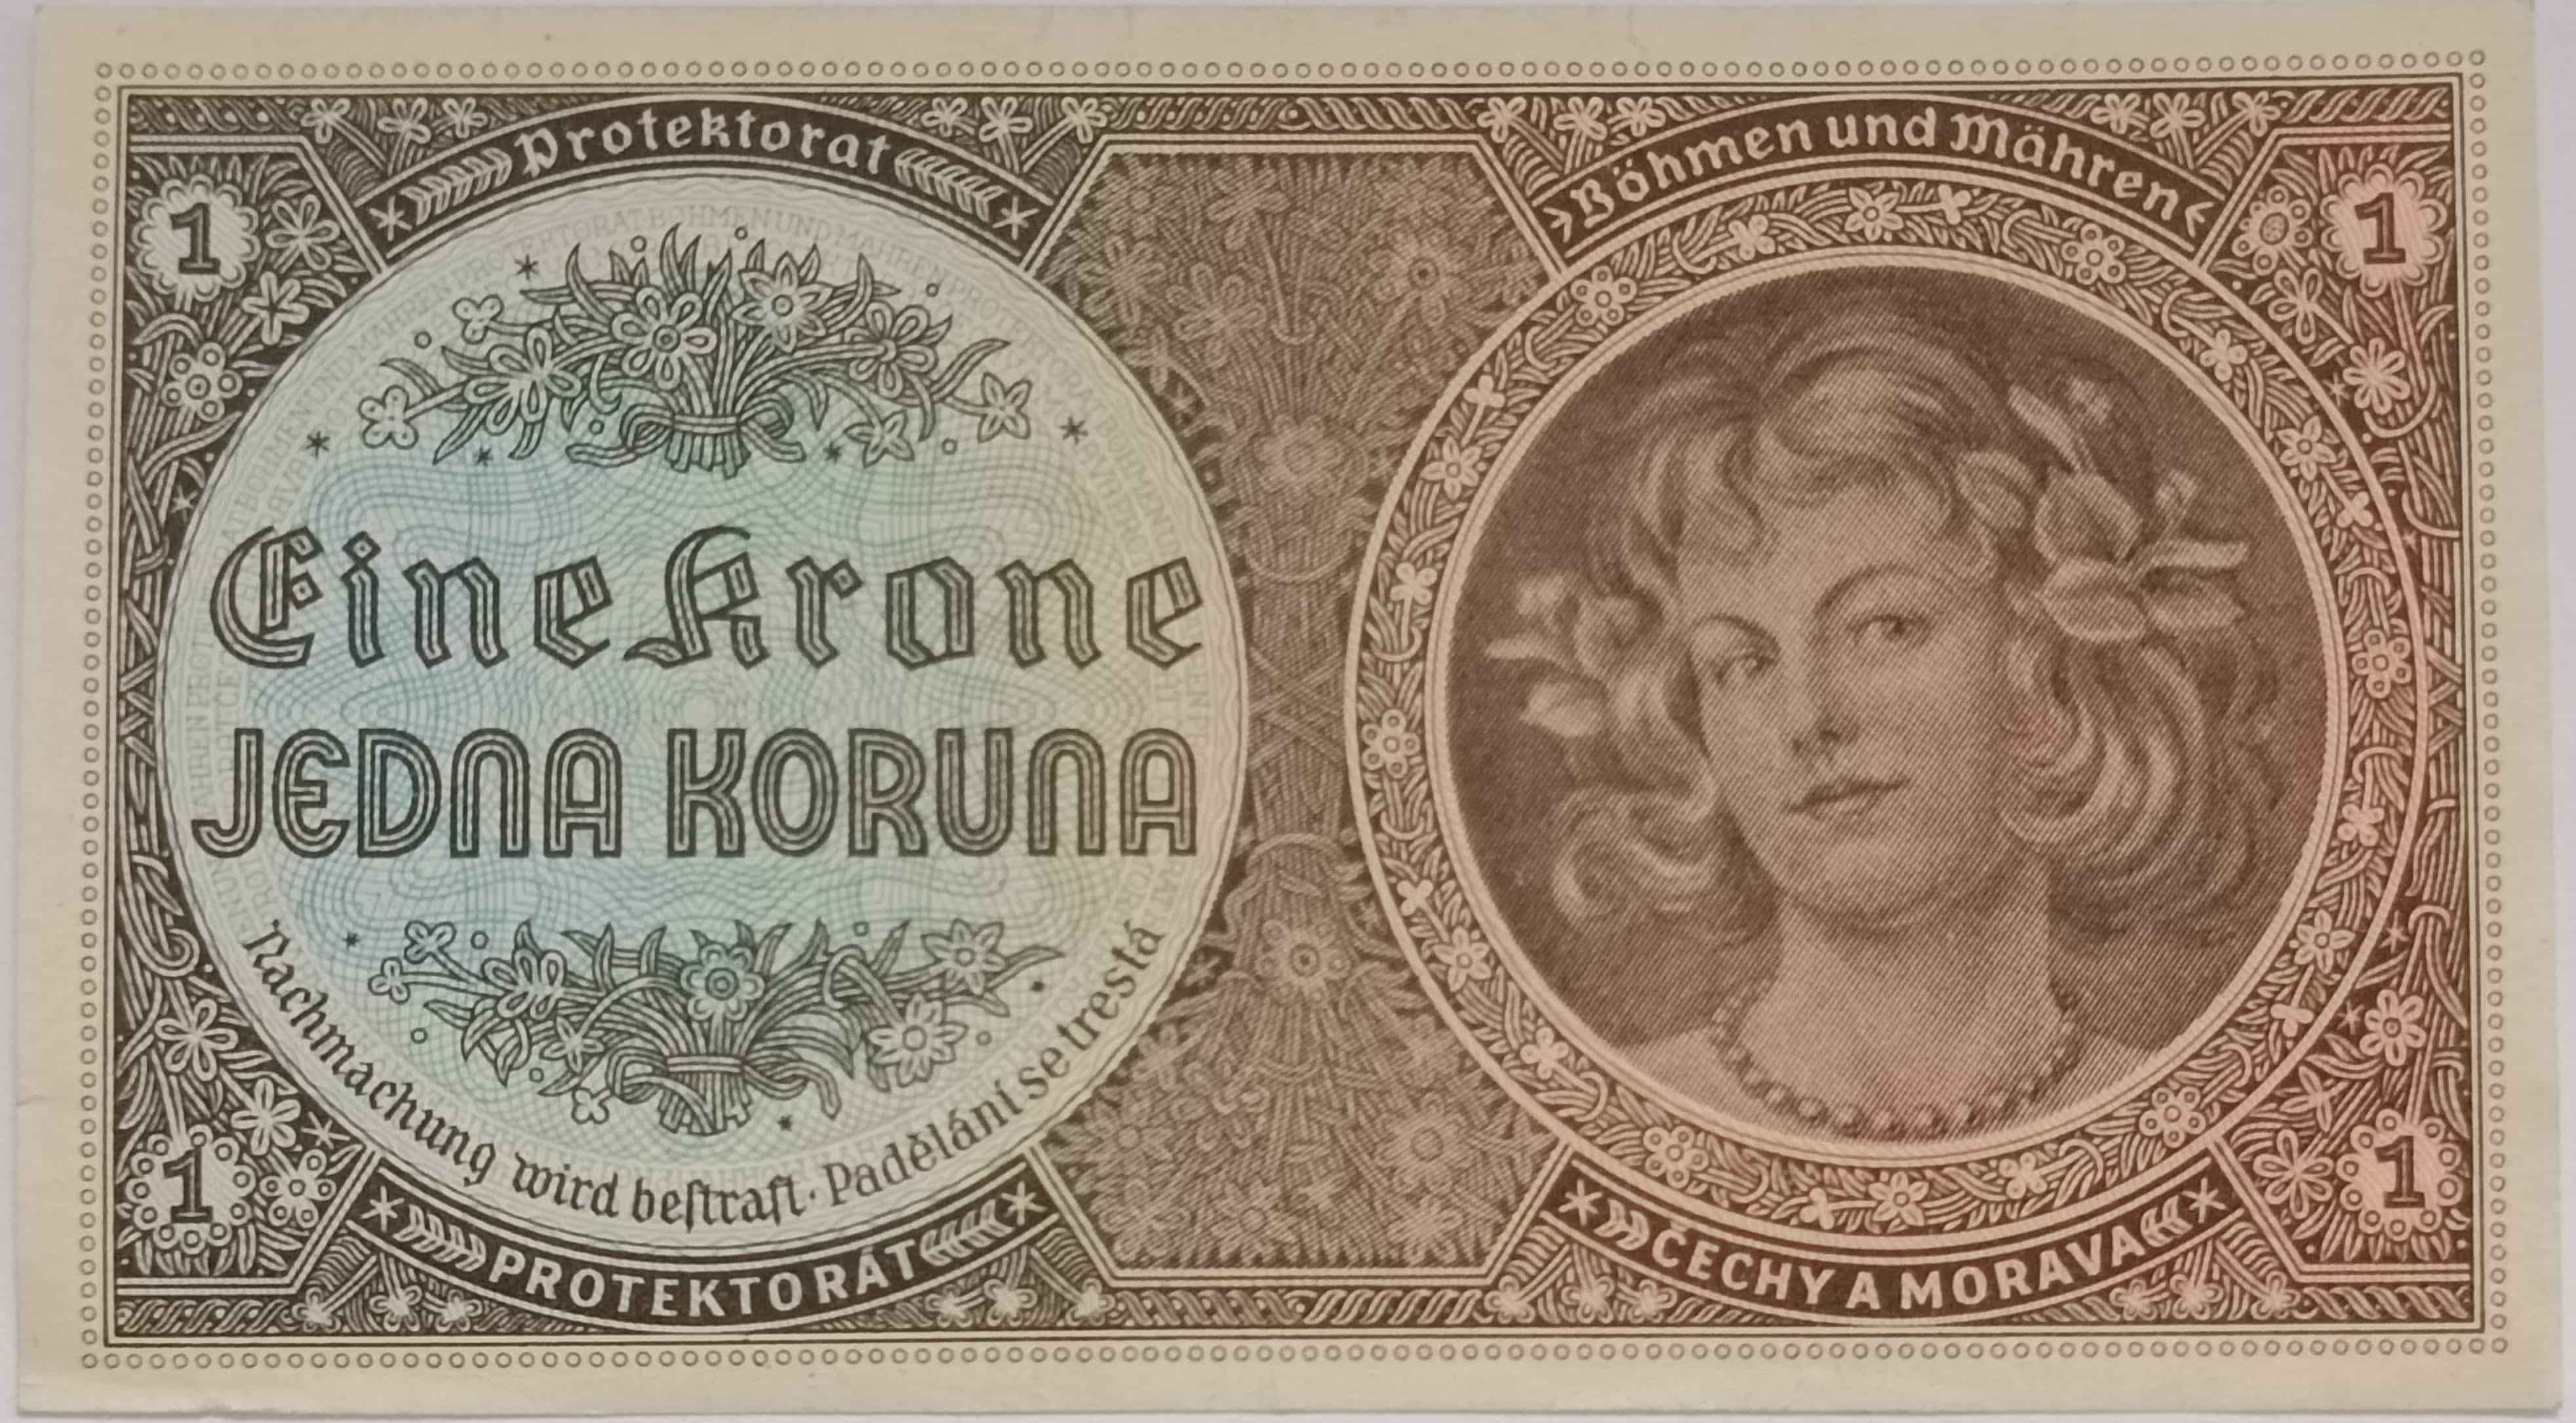 1 koruna 1940 C026